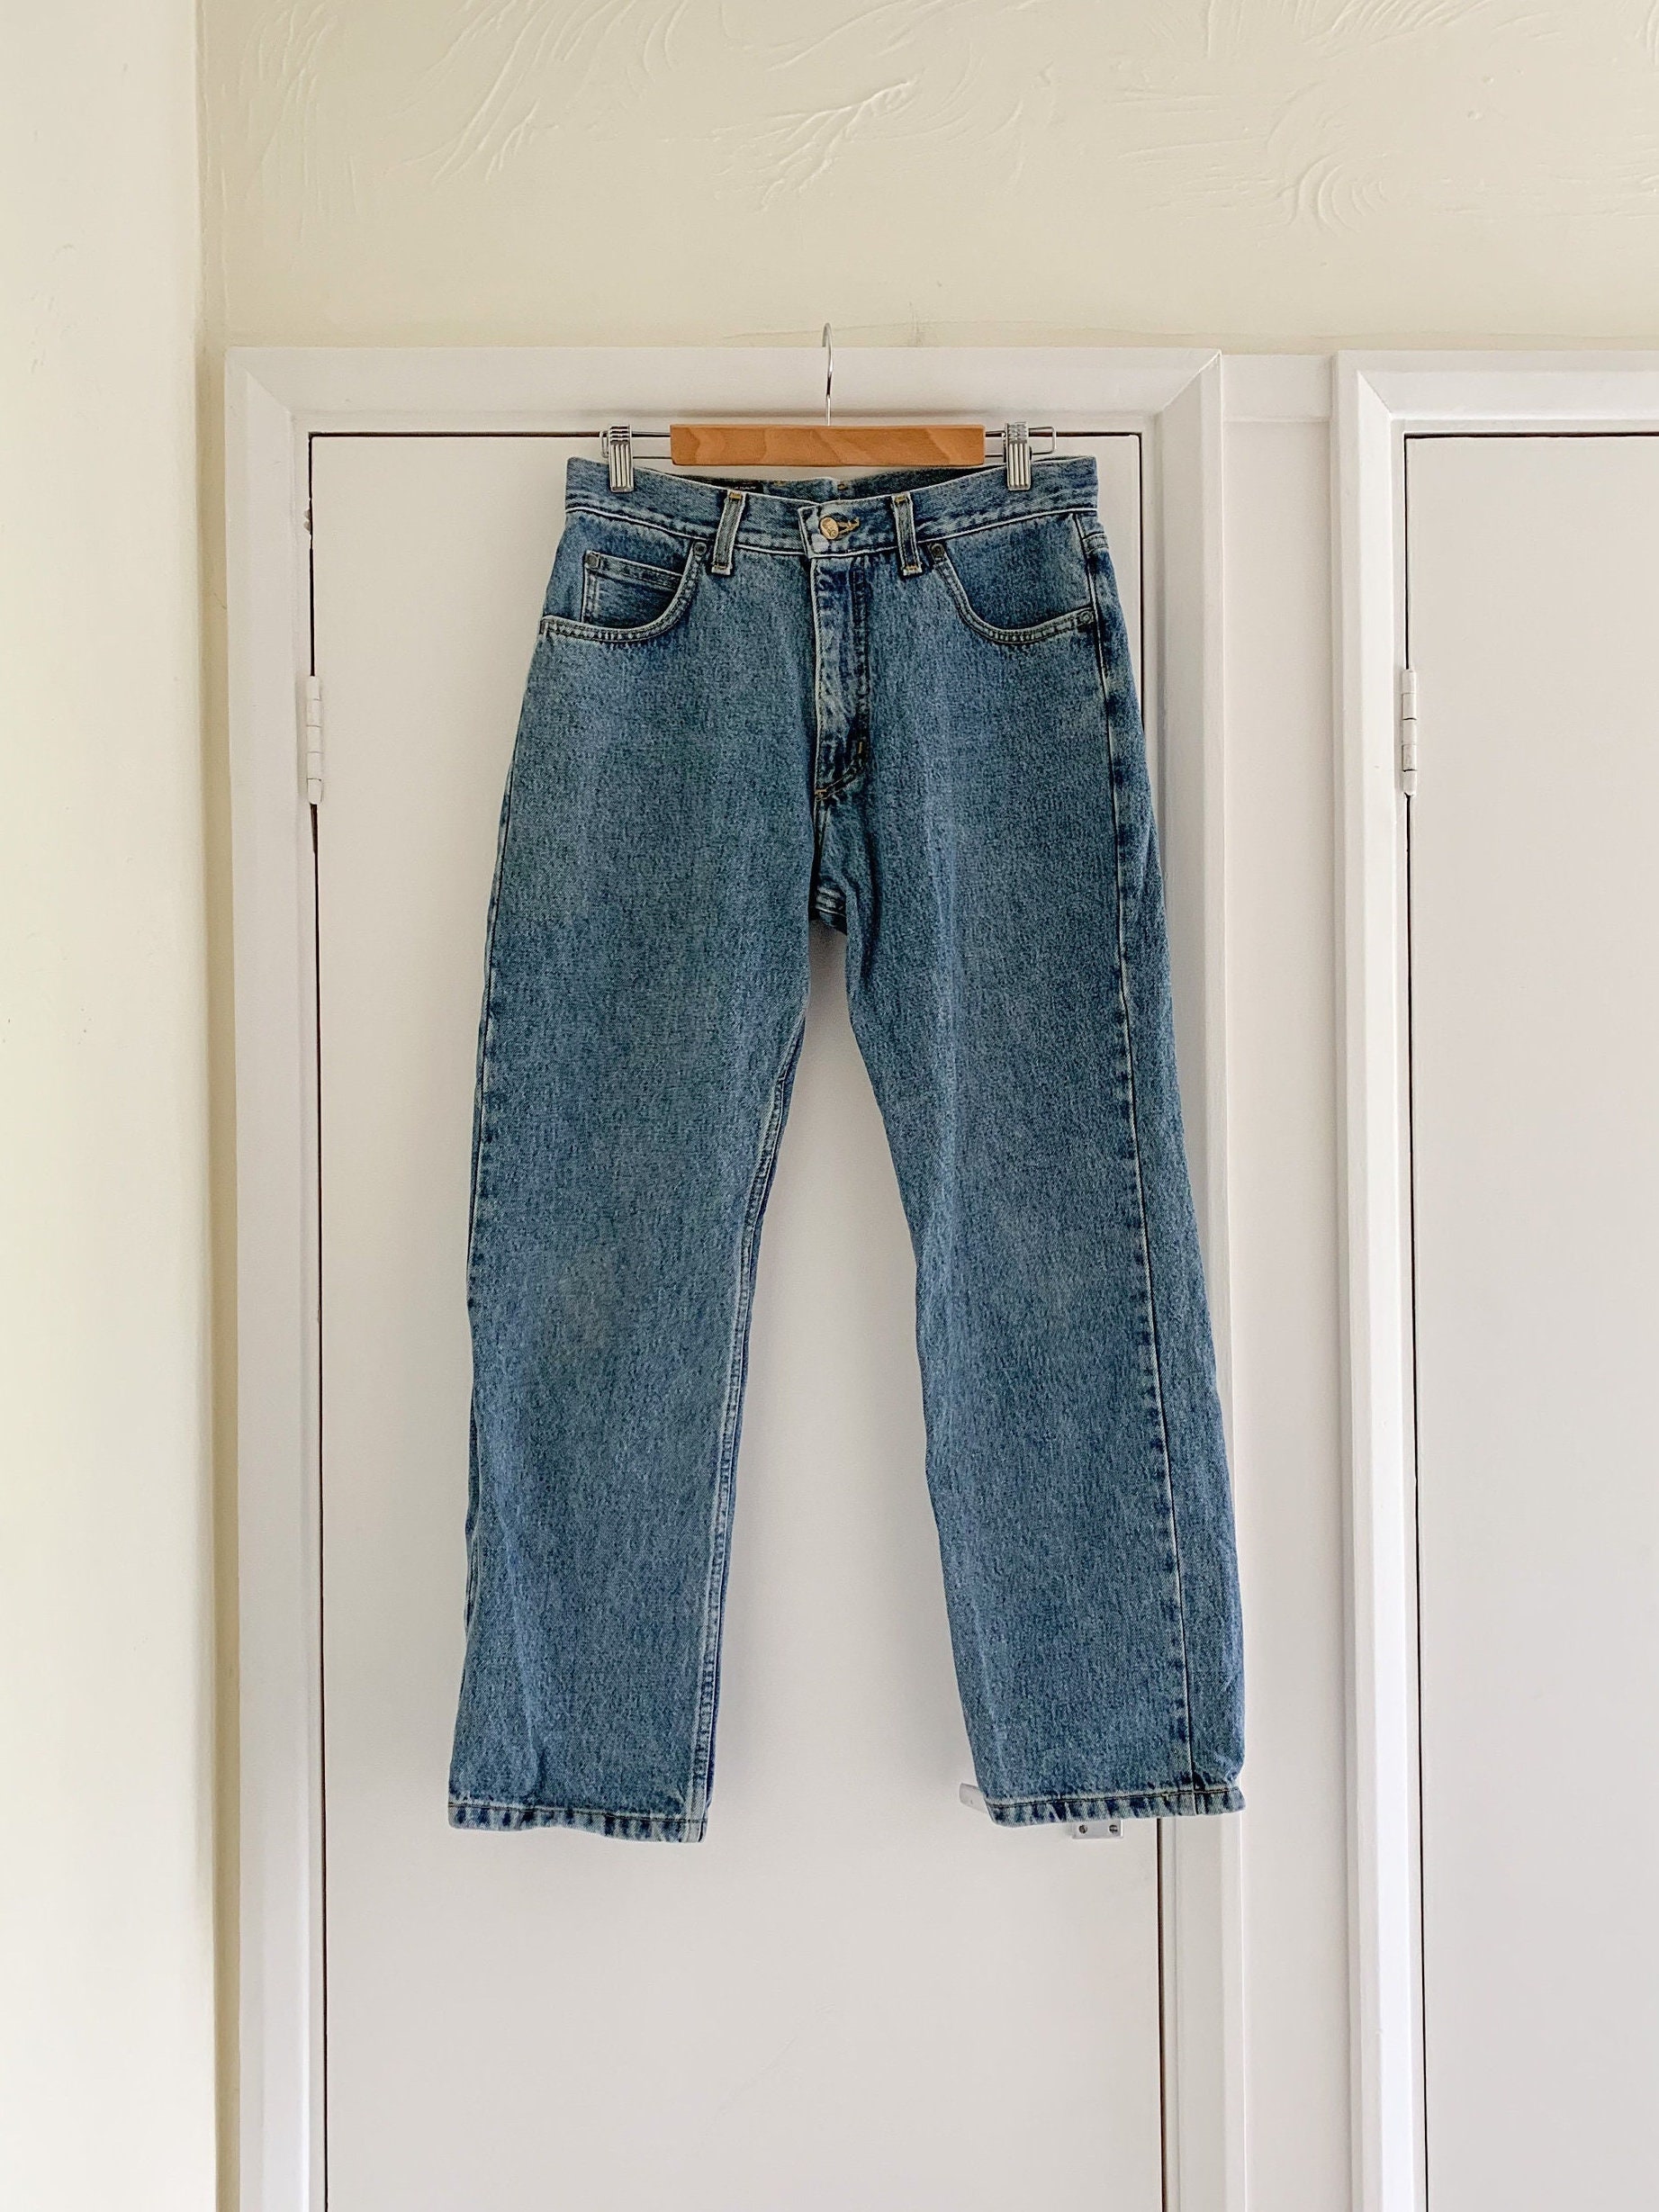 1970-80’s Deadstock Seafarer Sailor Jeans Selected by Nomad Vintage